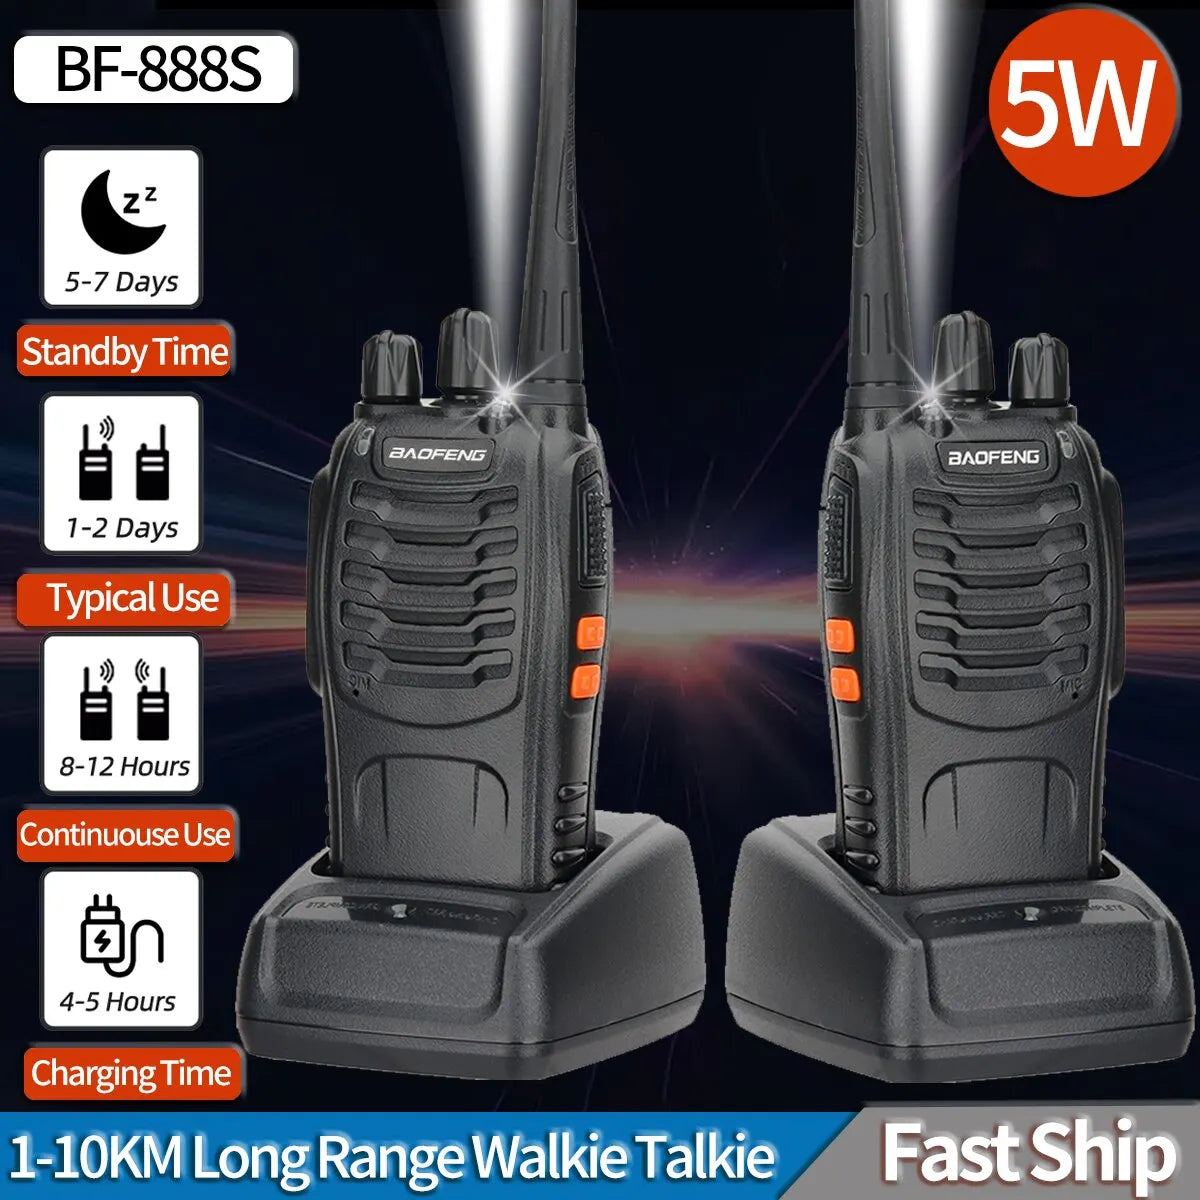 Baofeng BF-888S Walkie Talkie: Long Range, Affordable, 2-Pack